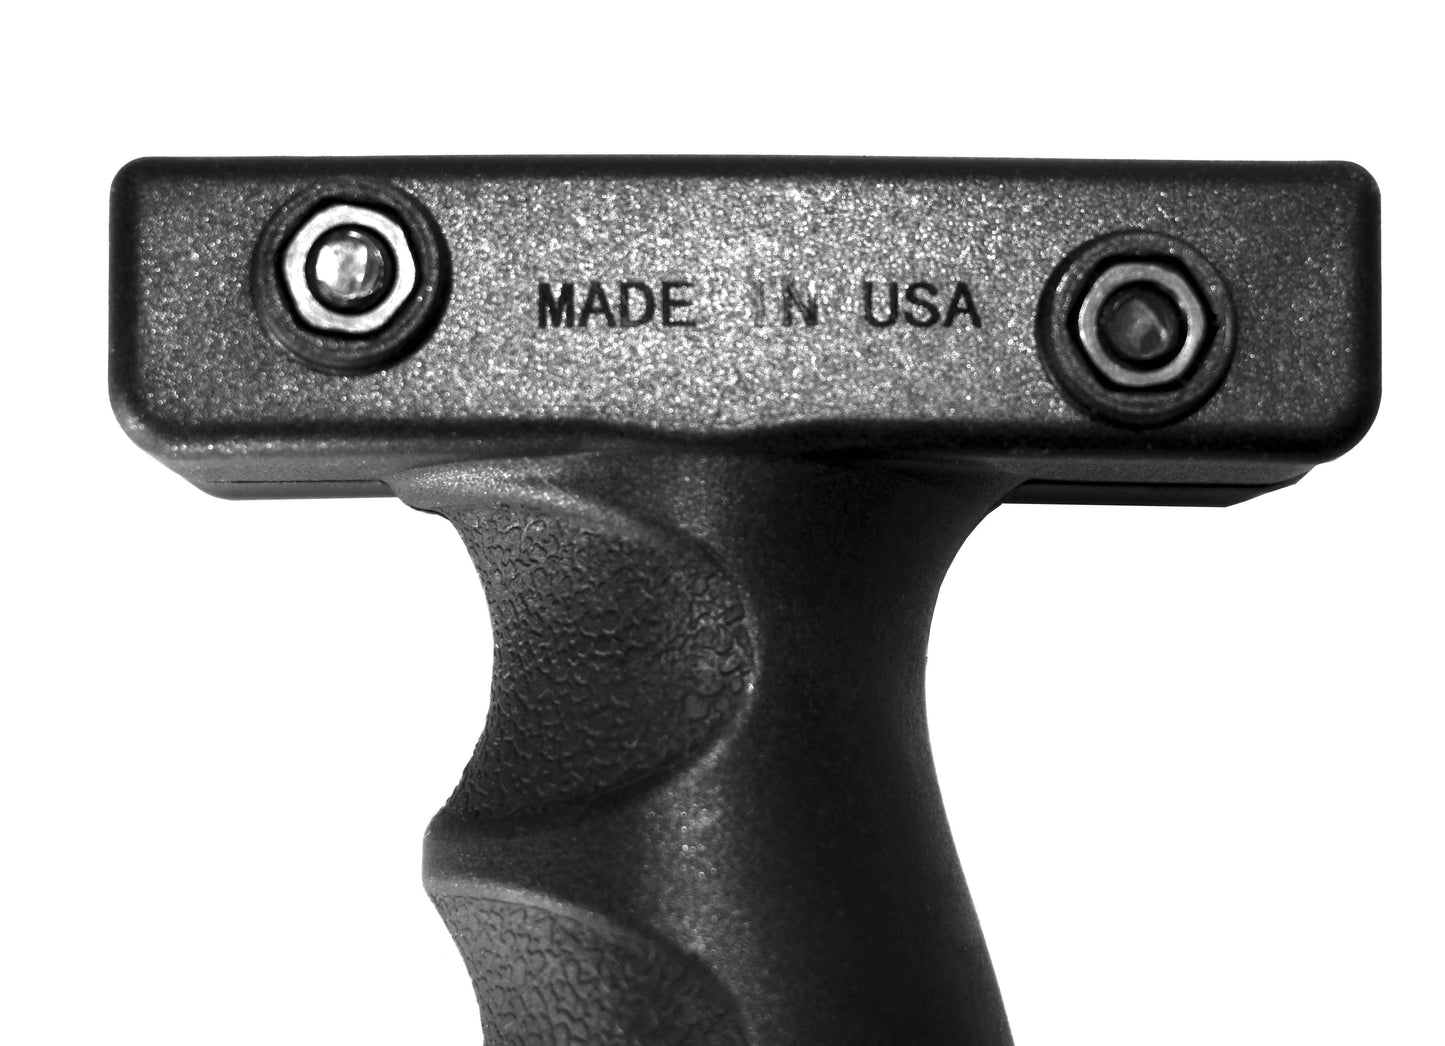 Tactical grip black for DYE dam paintball gun.